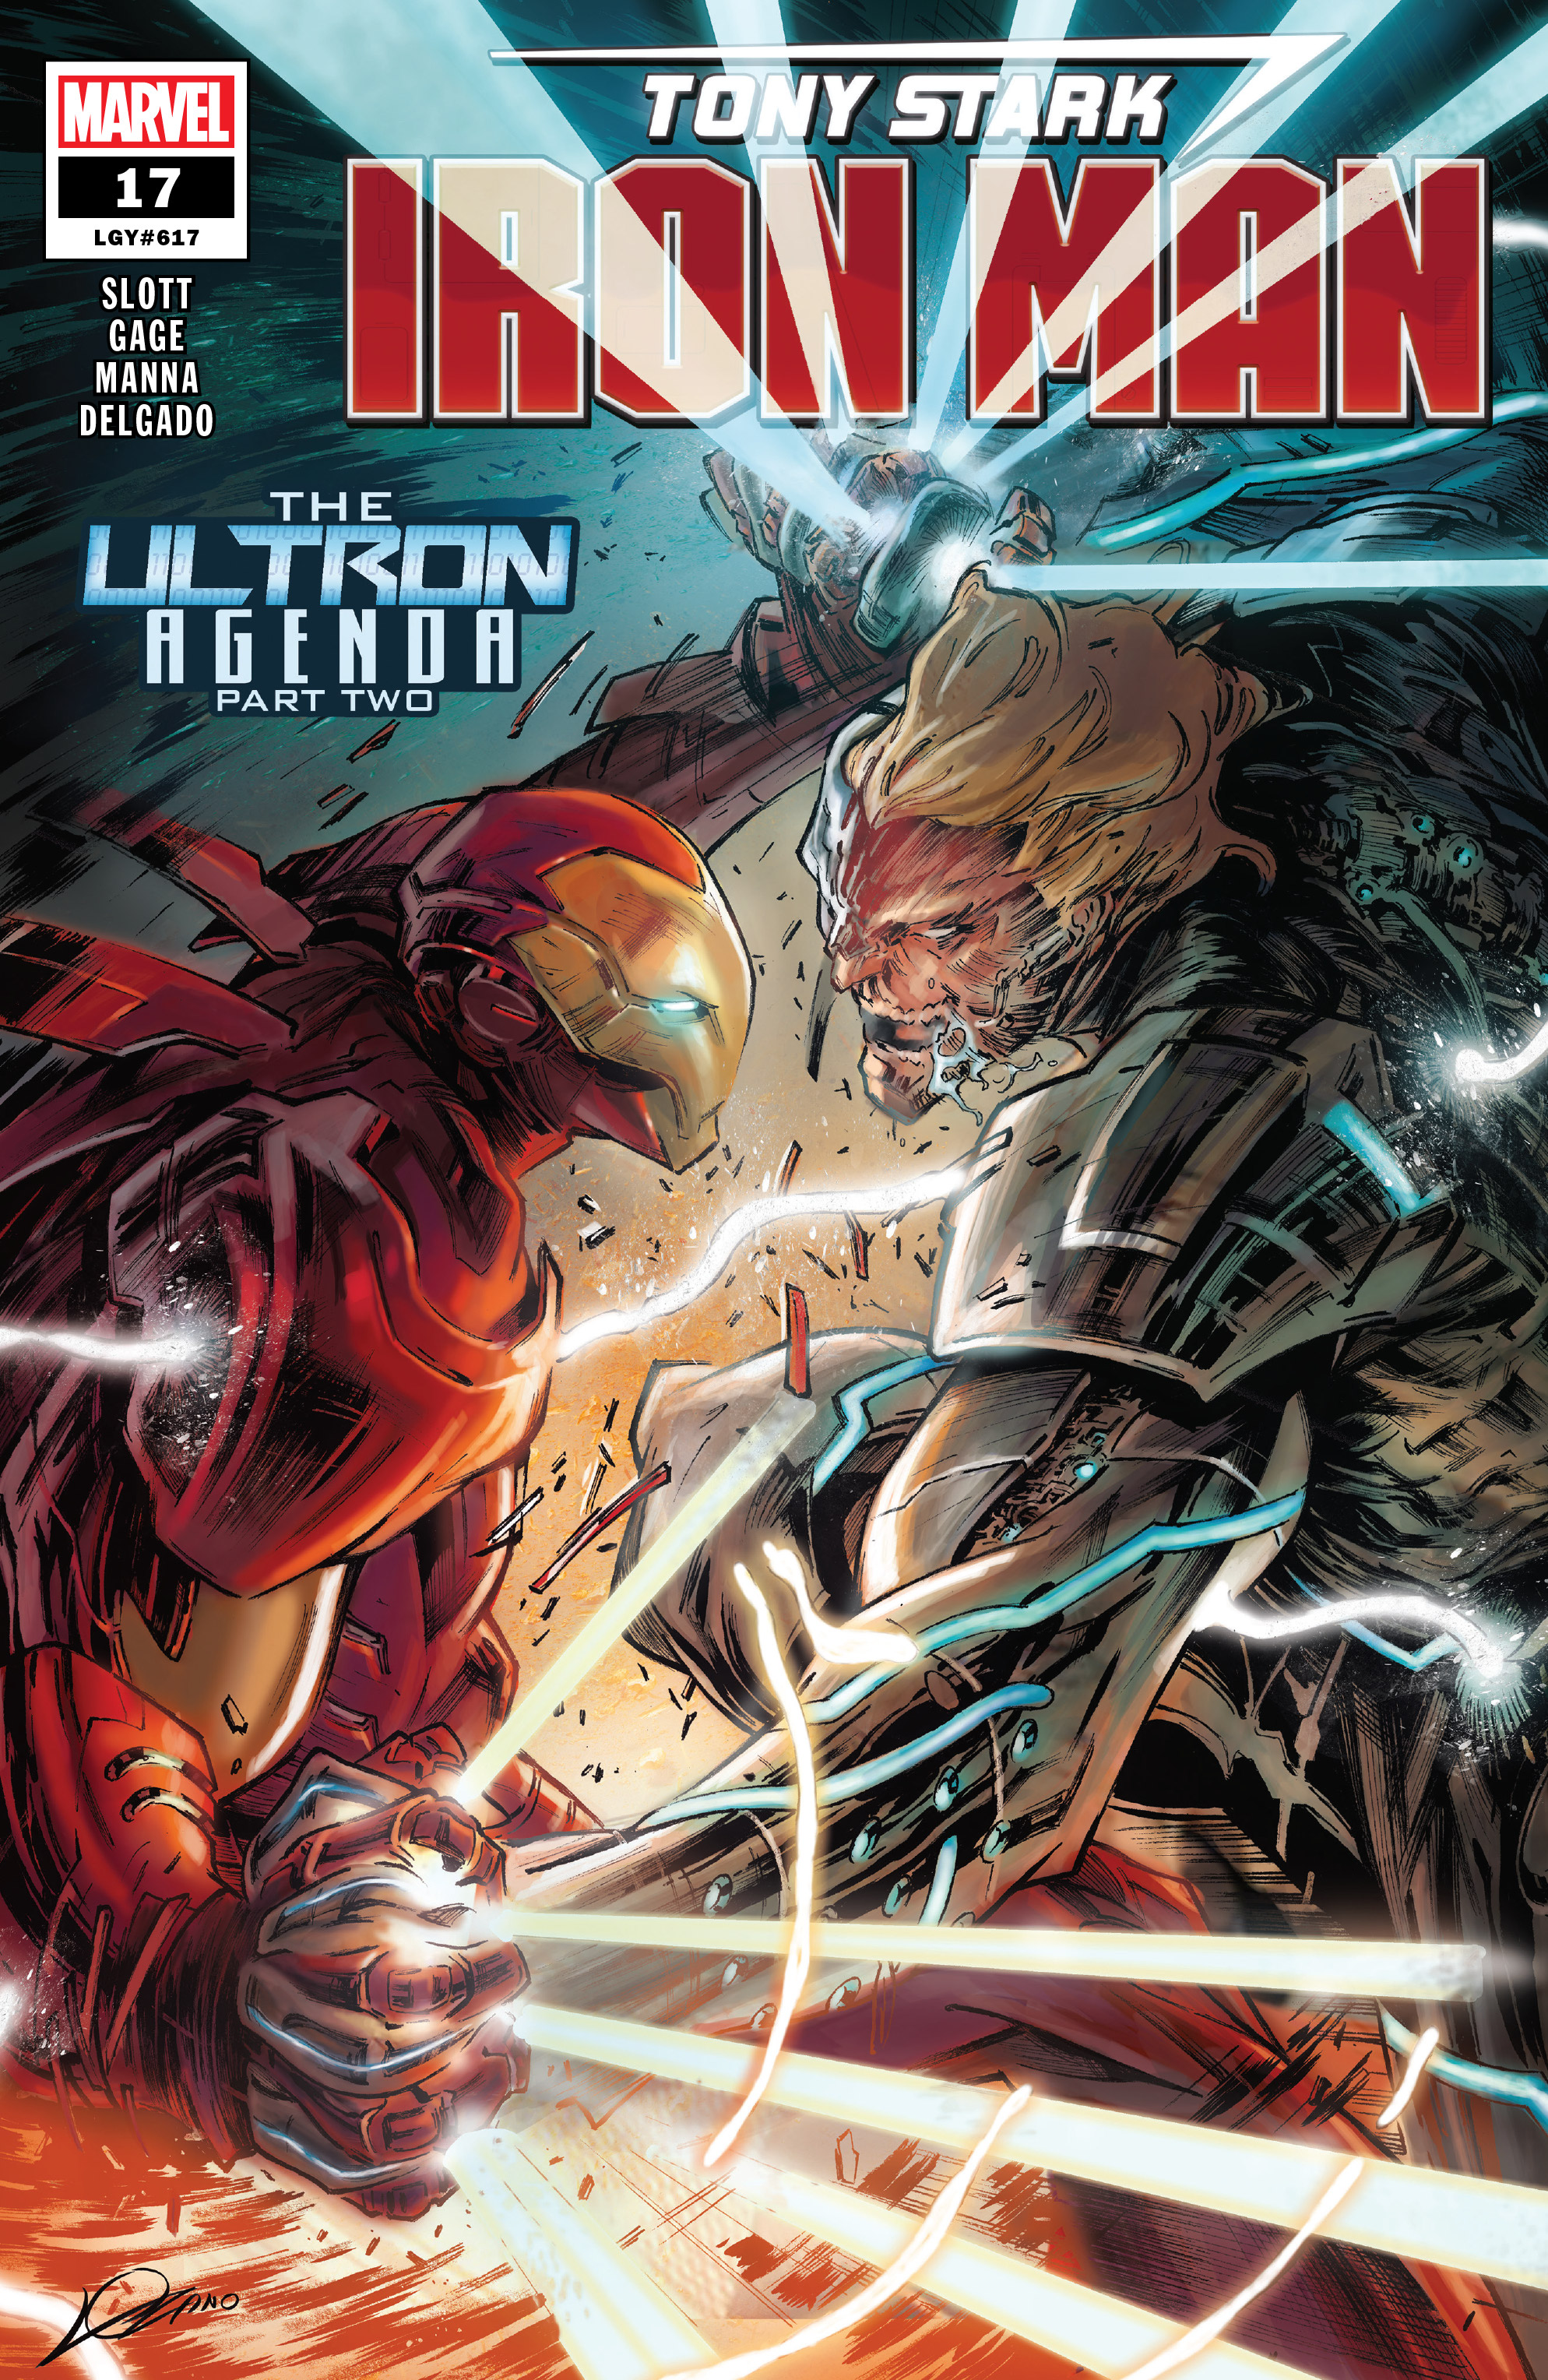 Read online Tony Stark: Iron Man comic -  Issue #17 - 1